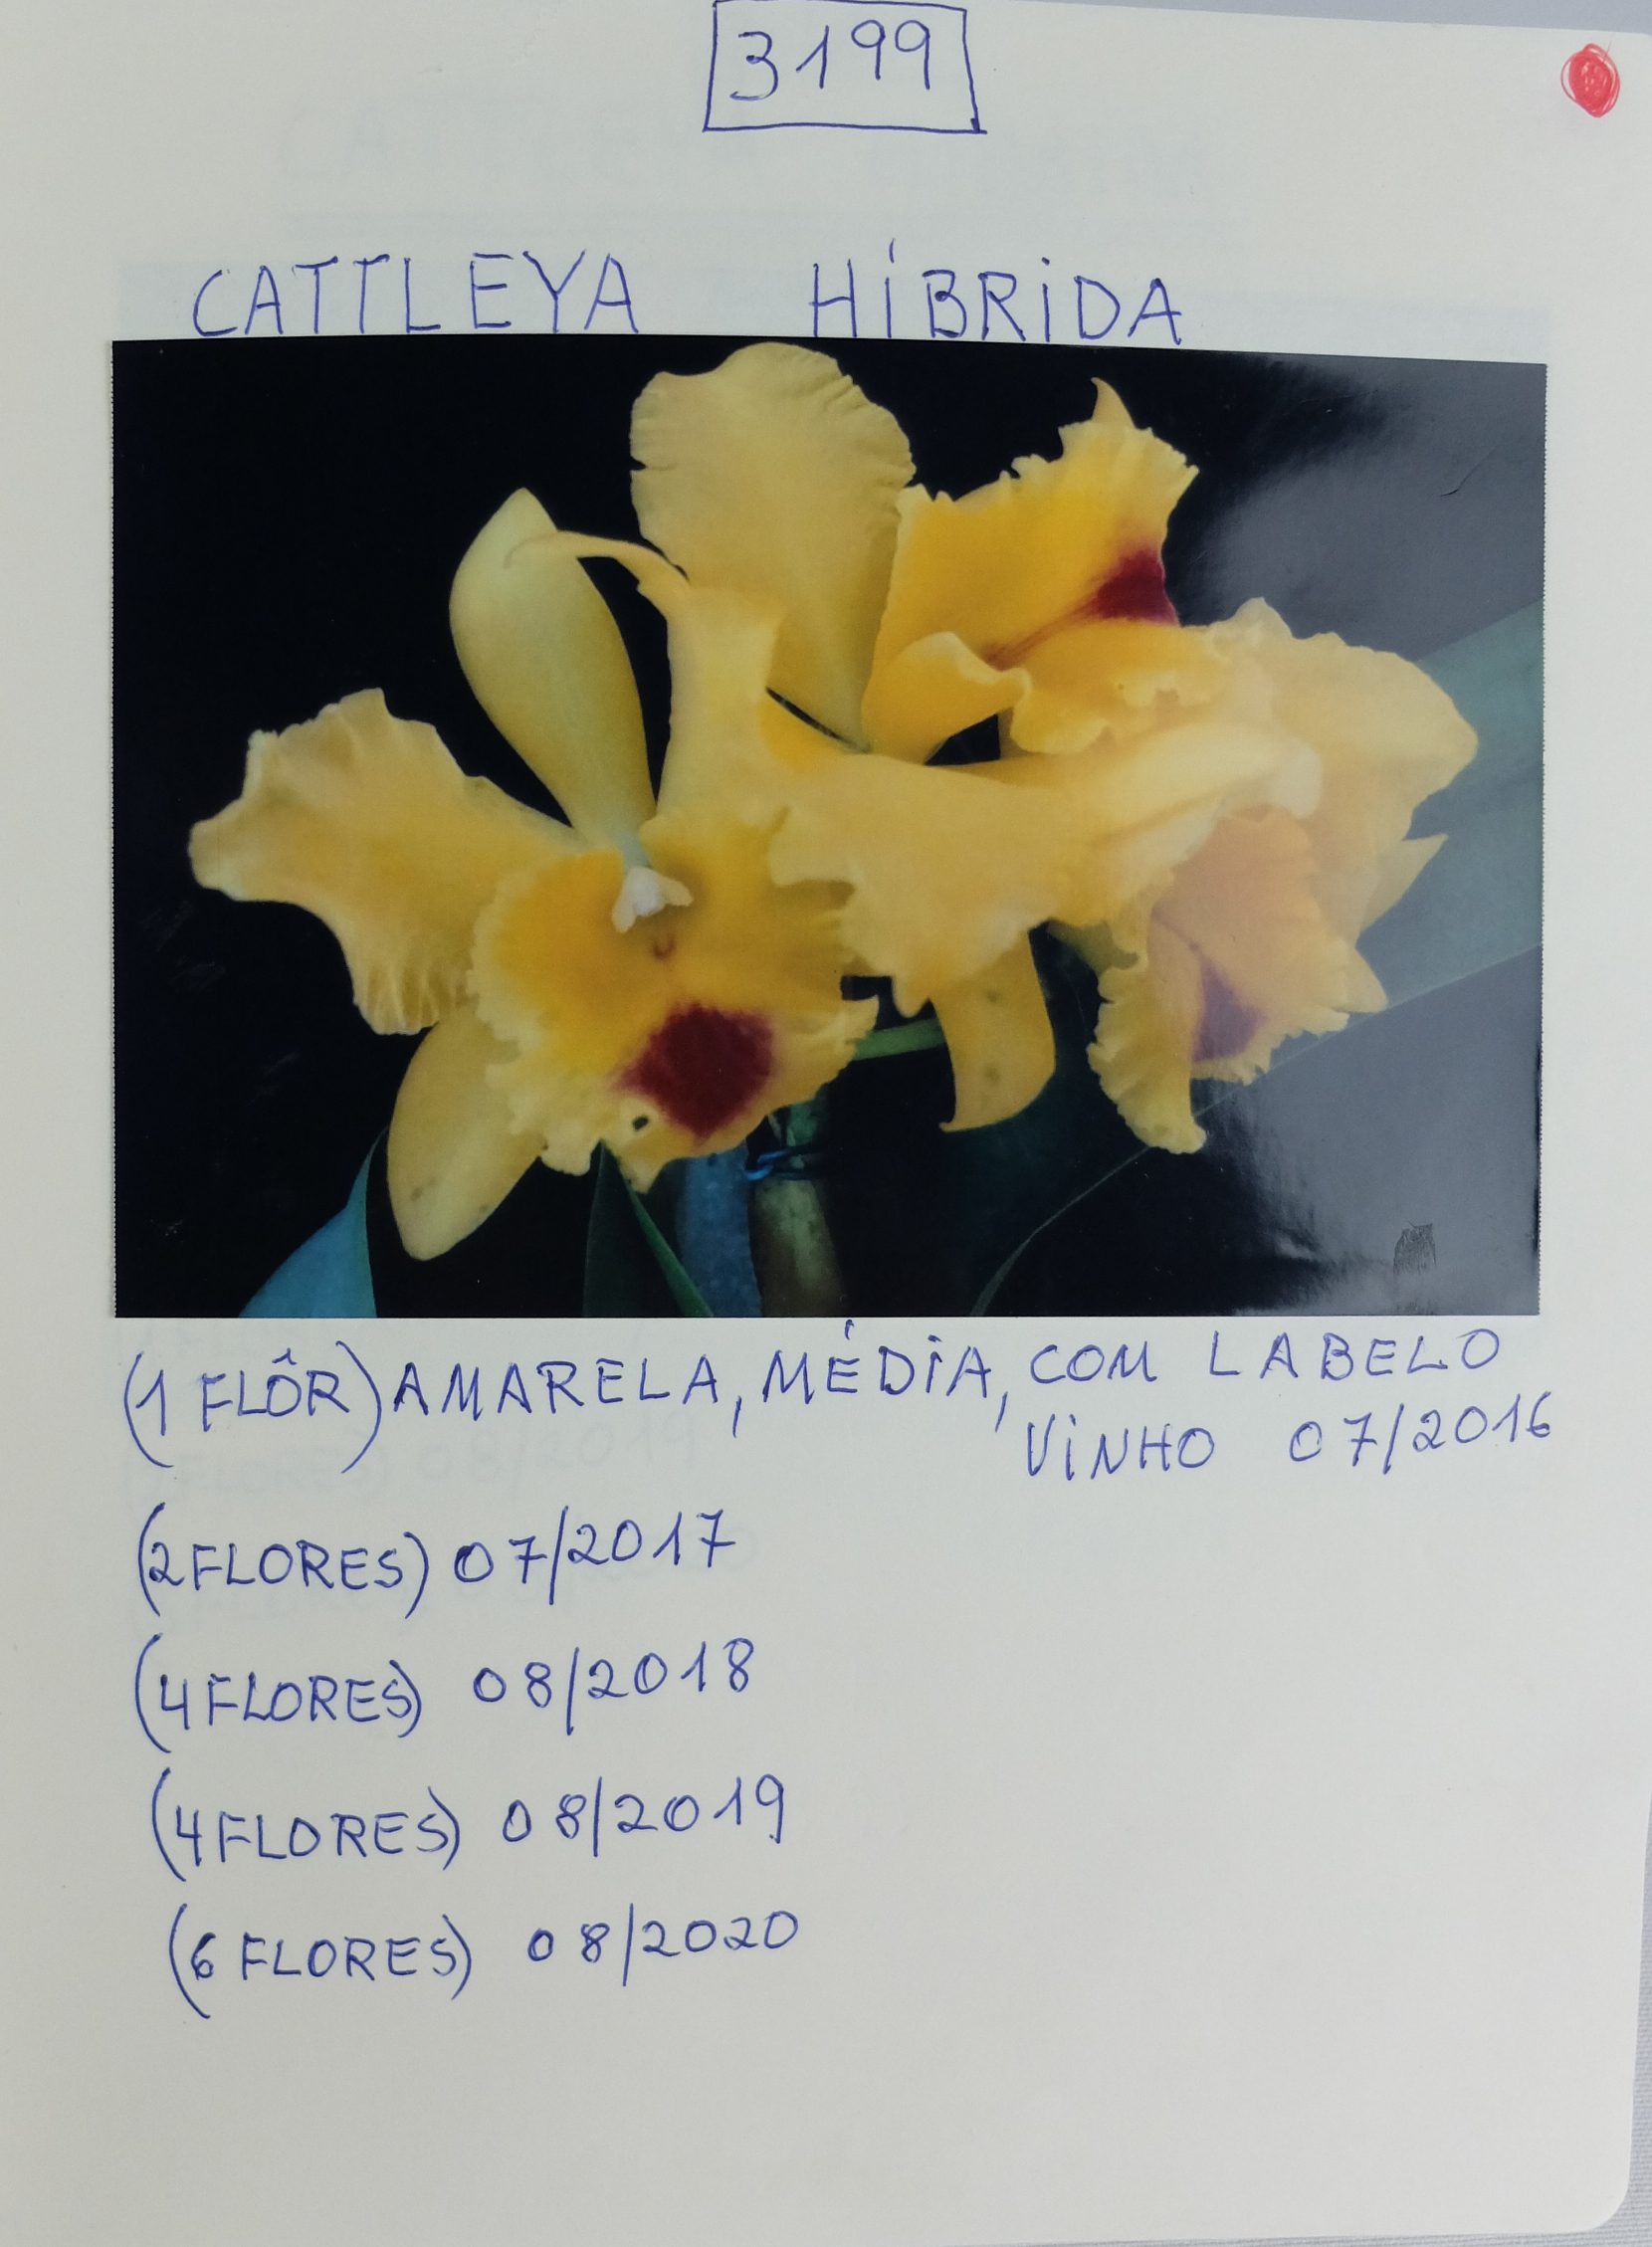 3199 Cattleya Híbrida - Orquidaria Rosita